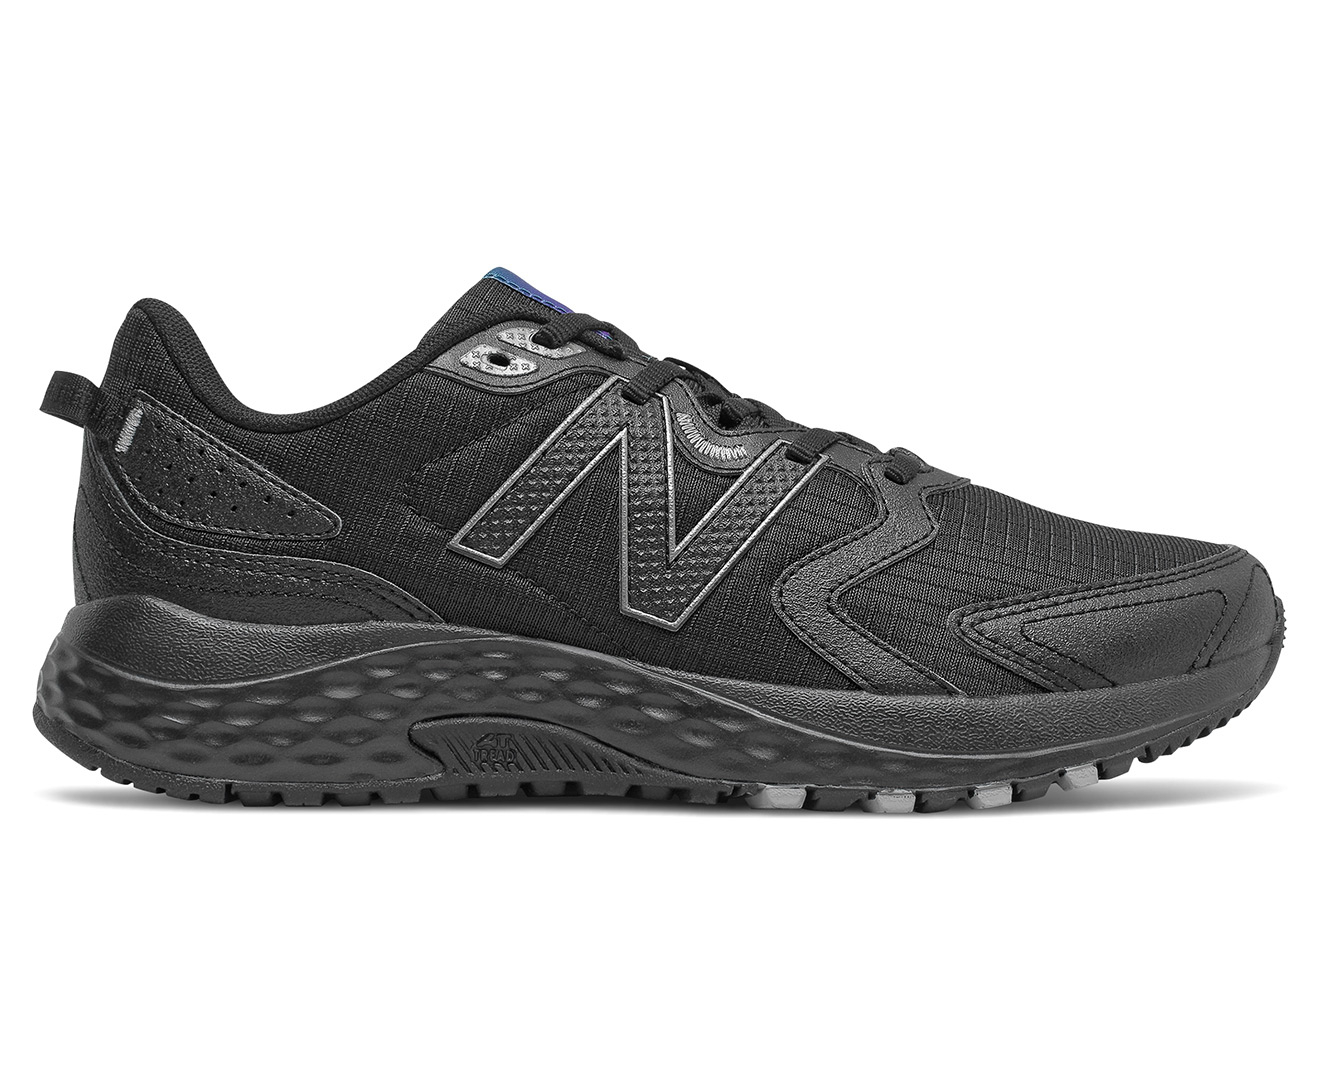 New Balance Men's 410v7 Wide Fit Trail Running Shoes - Black | Catch.com.au